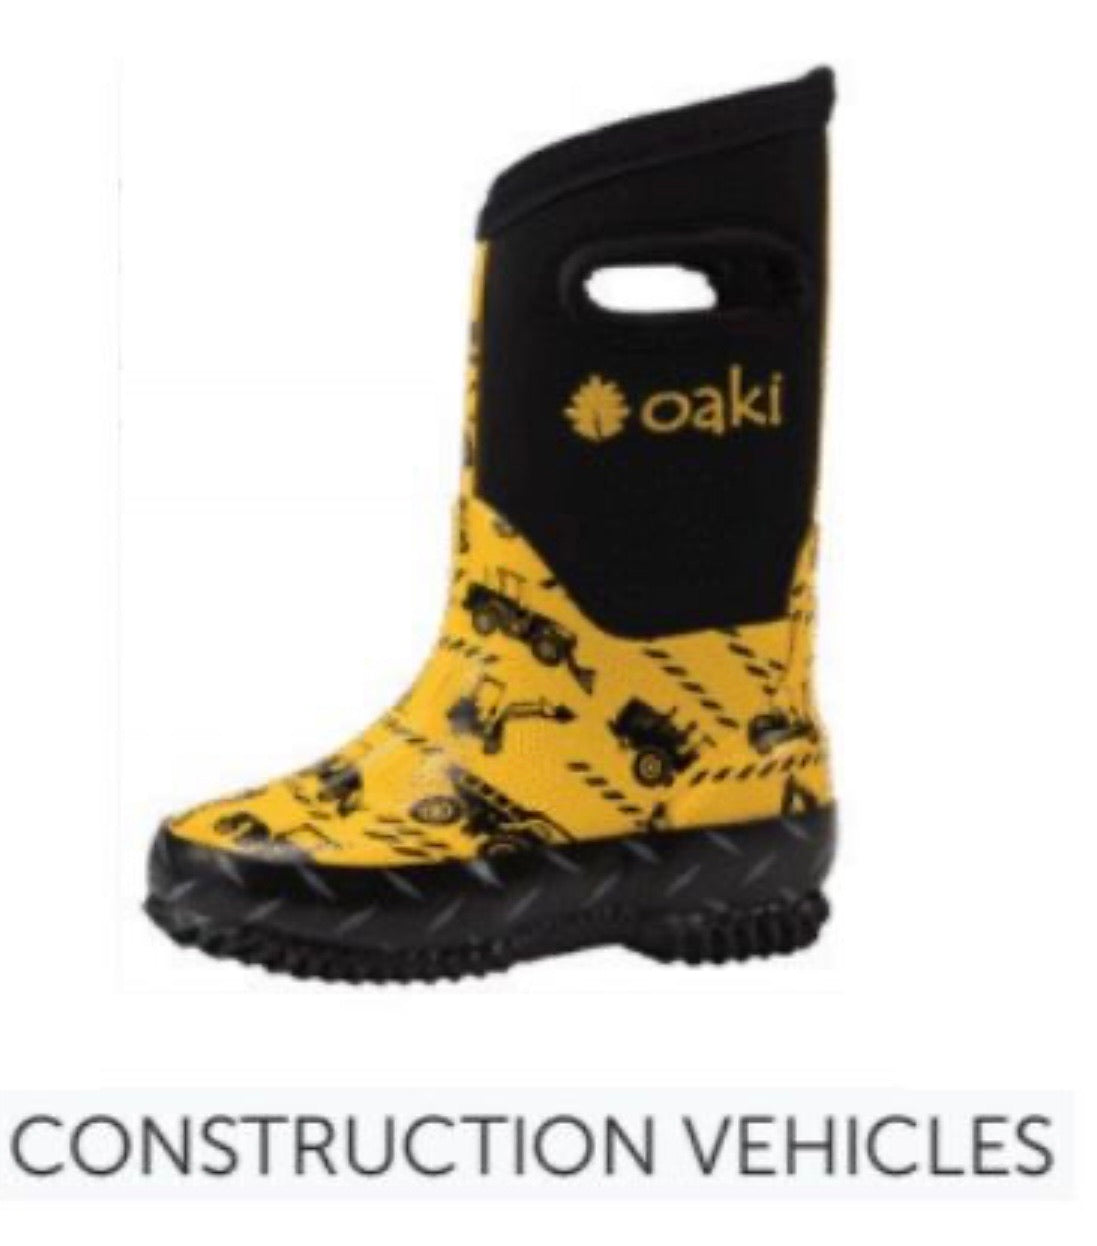 OAKI contruction vehicles snow/rain boot